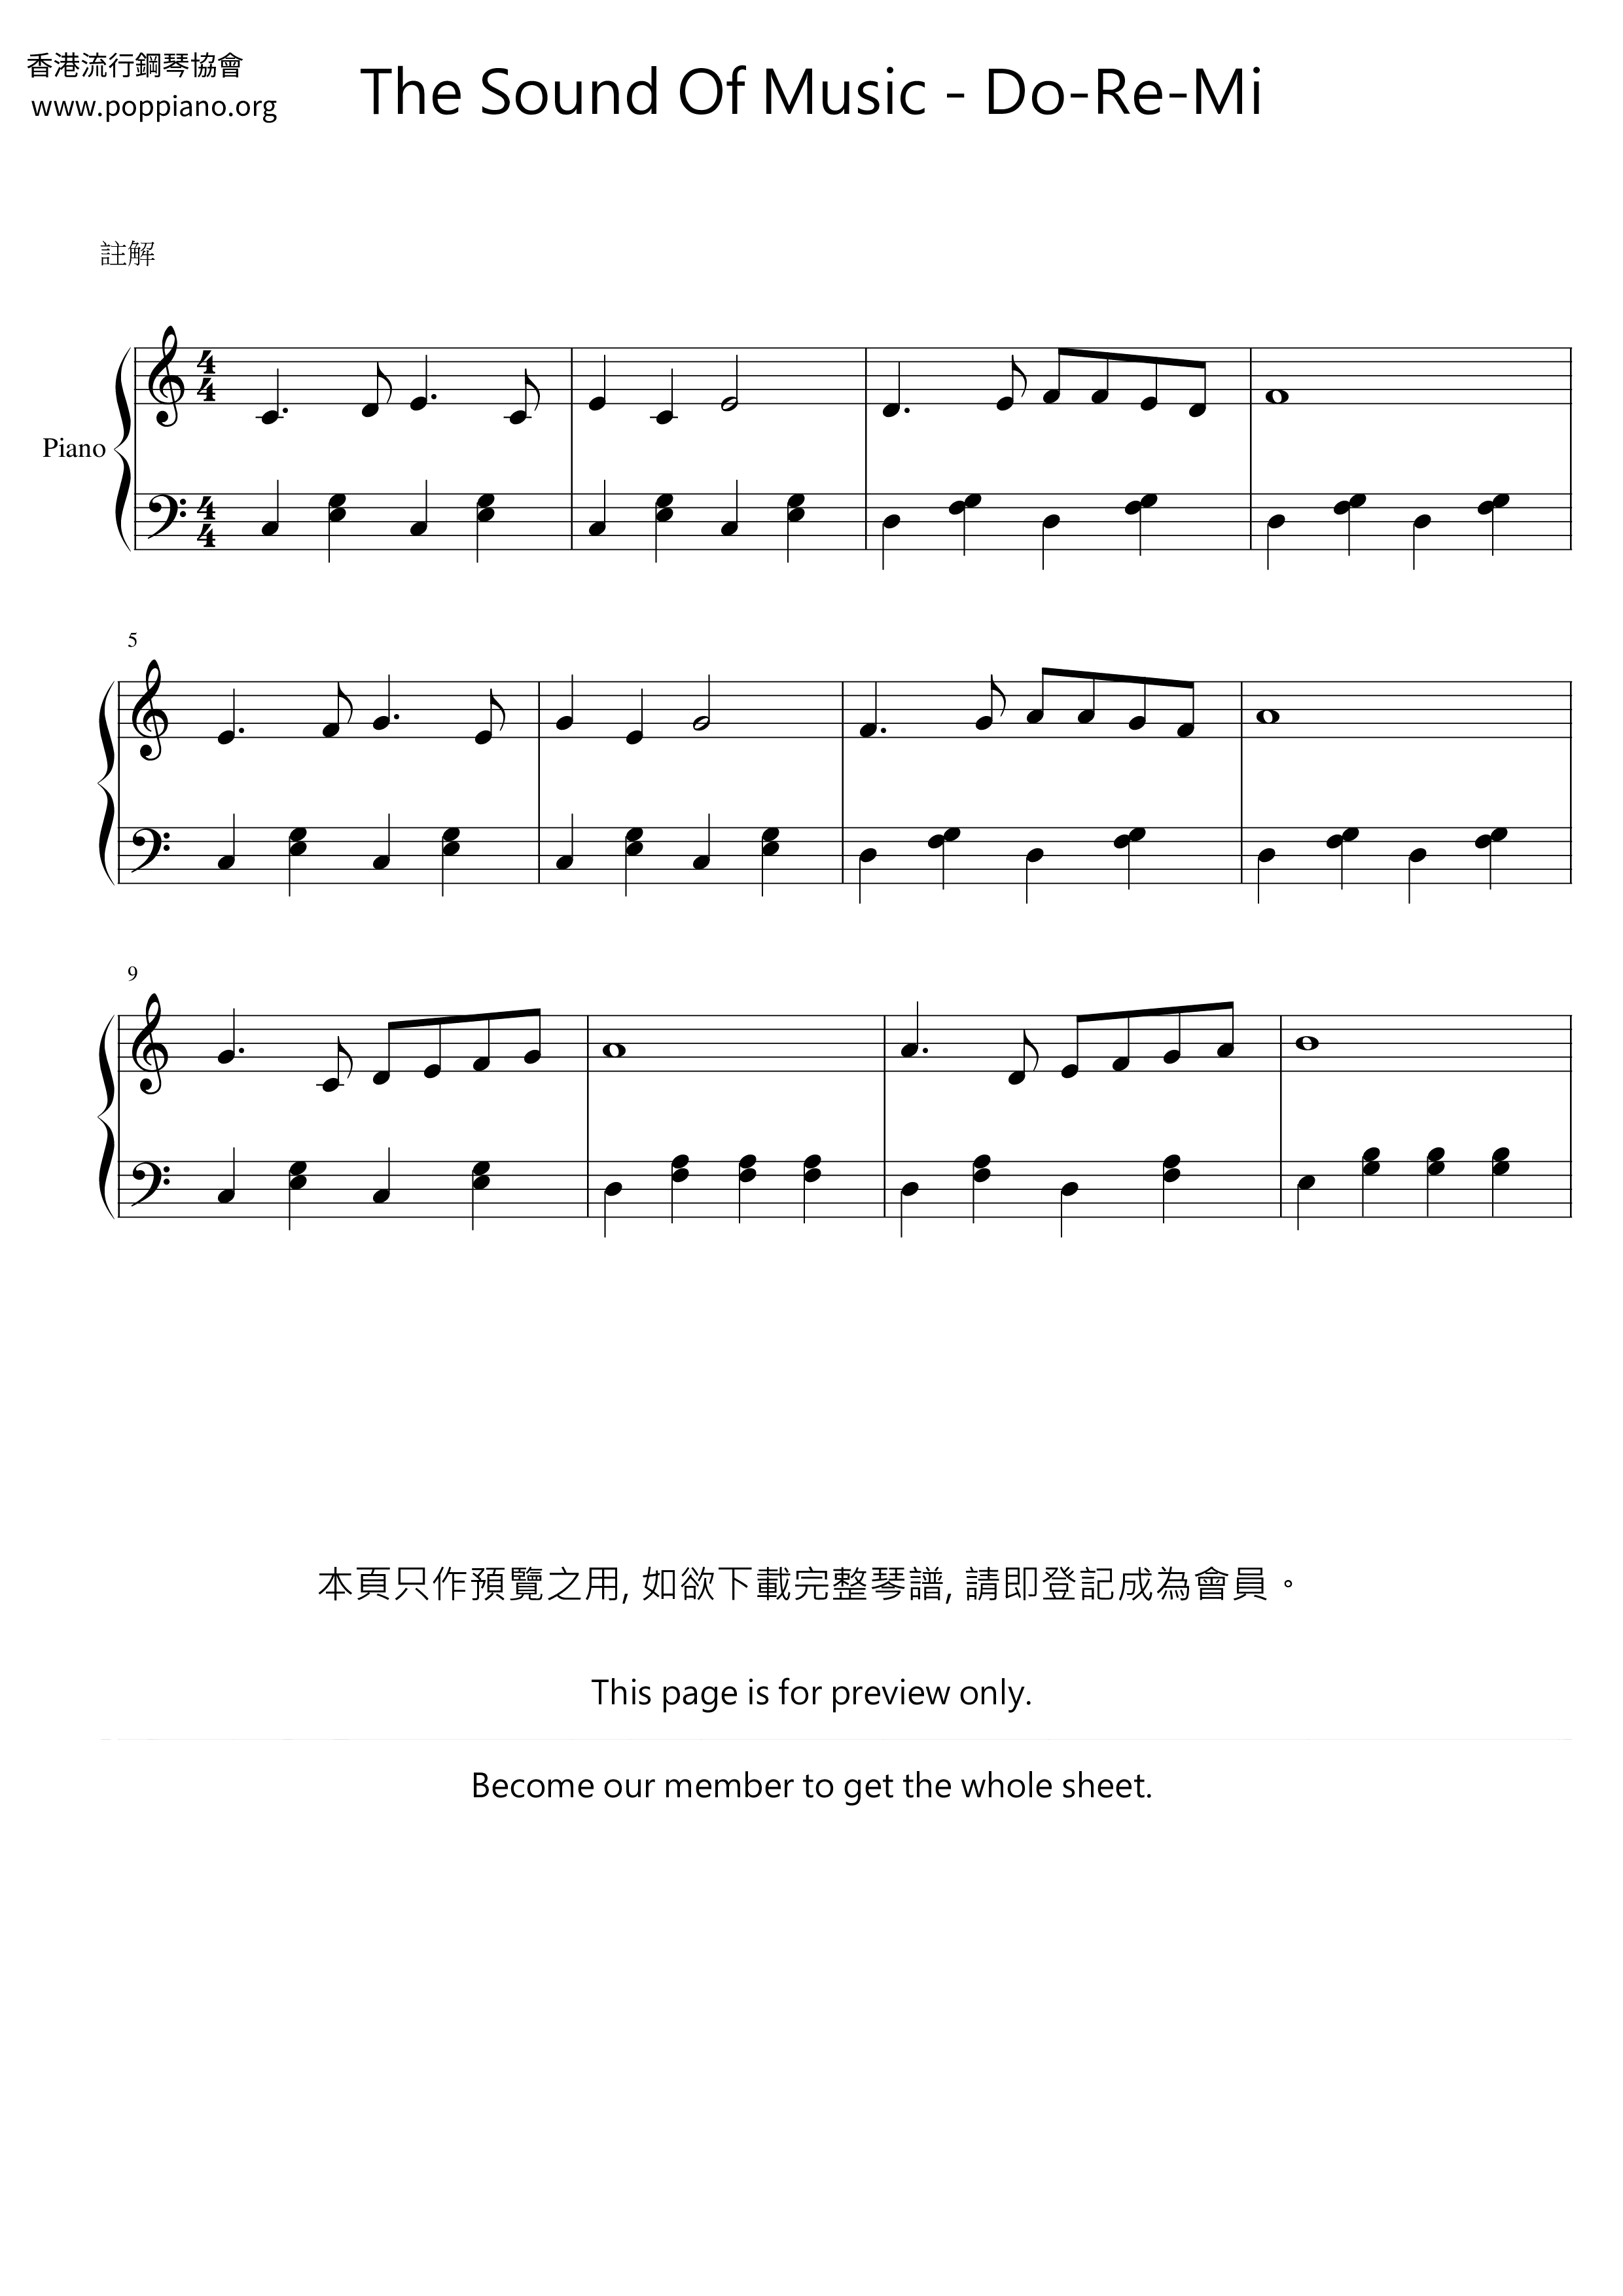 The Sound Of Music - Do-Re-Miピアノ譜